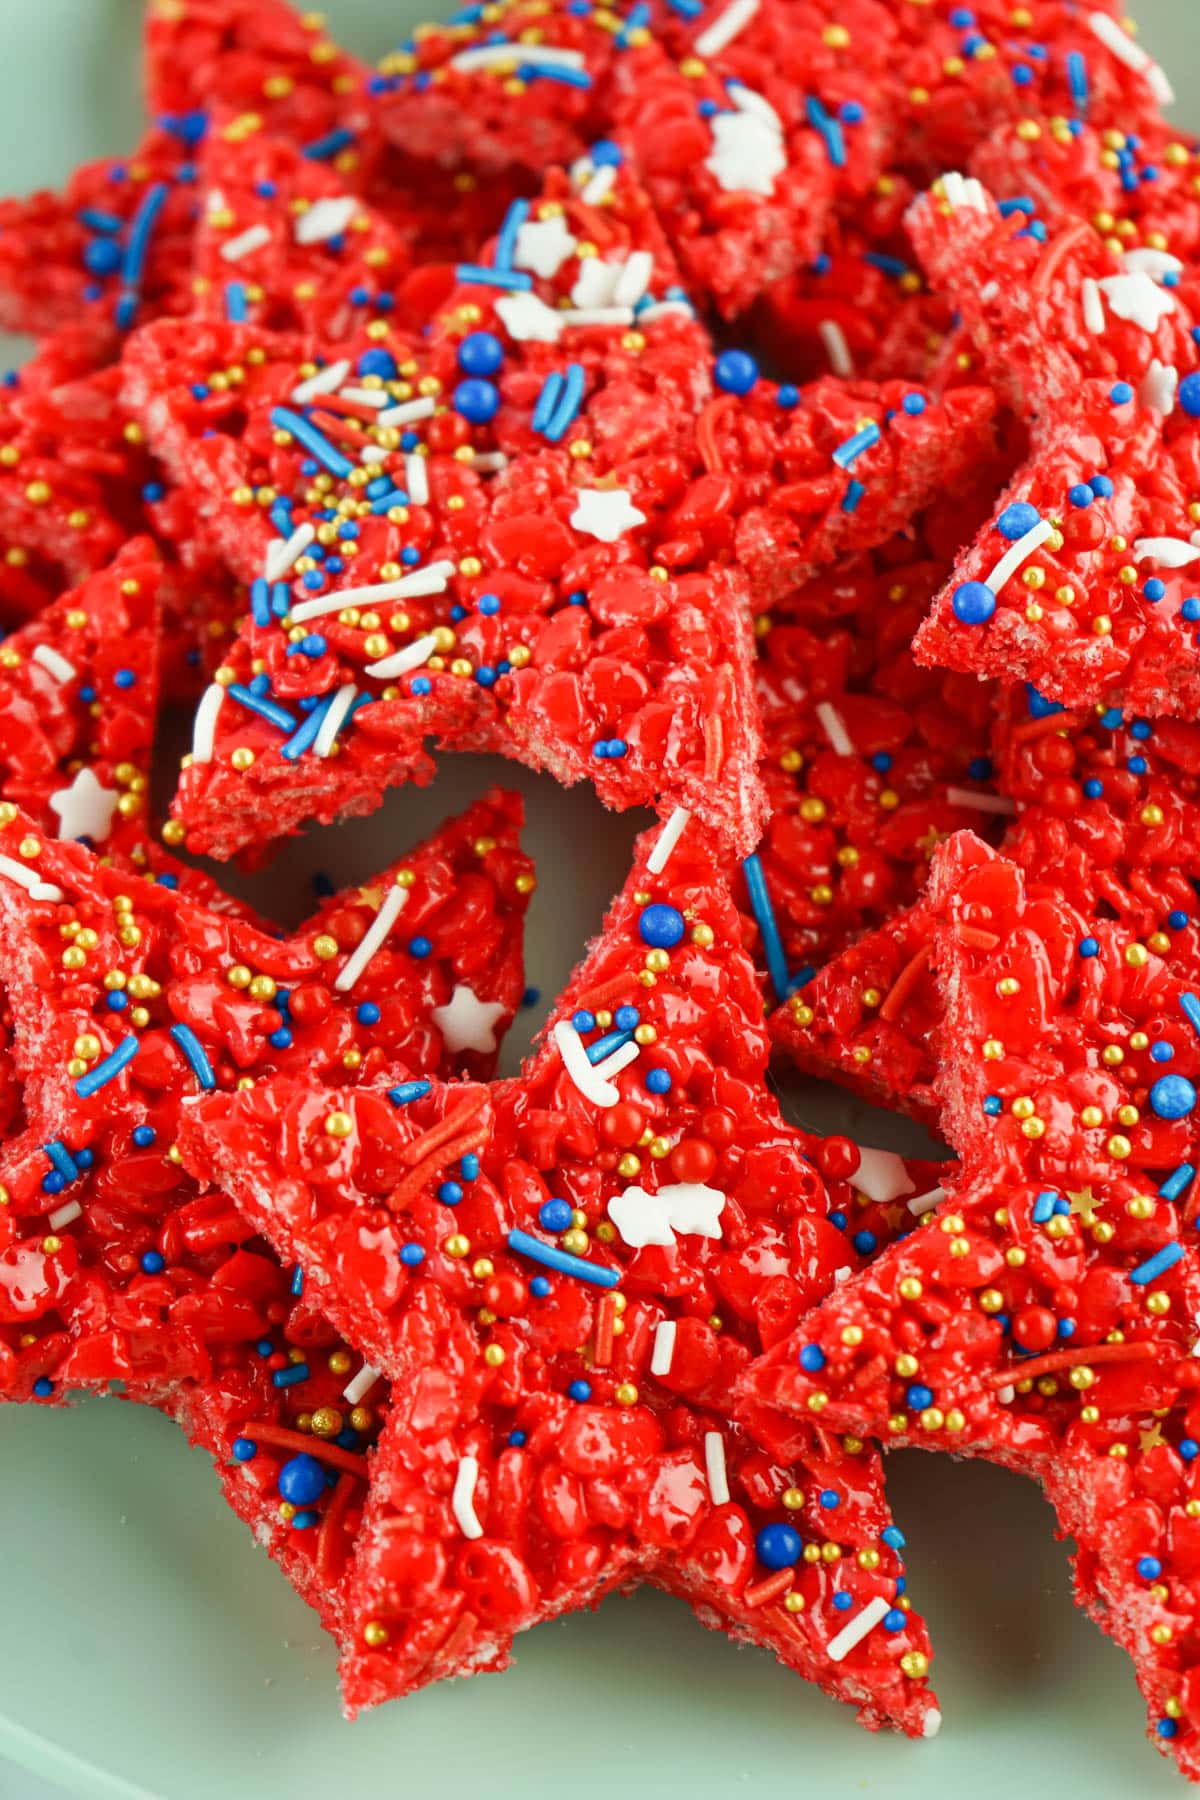 Red Rice Krispie Treats shaped like stars